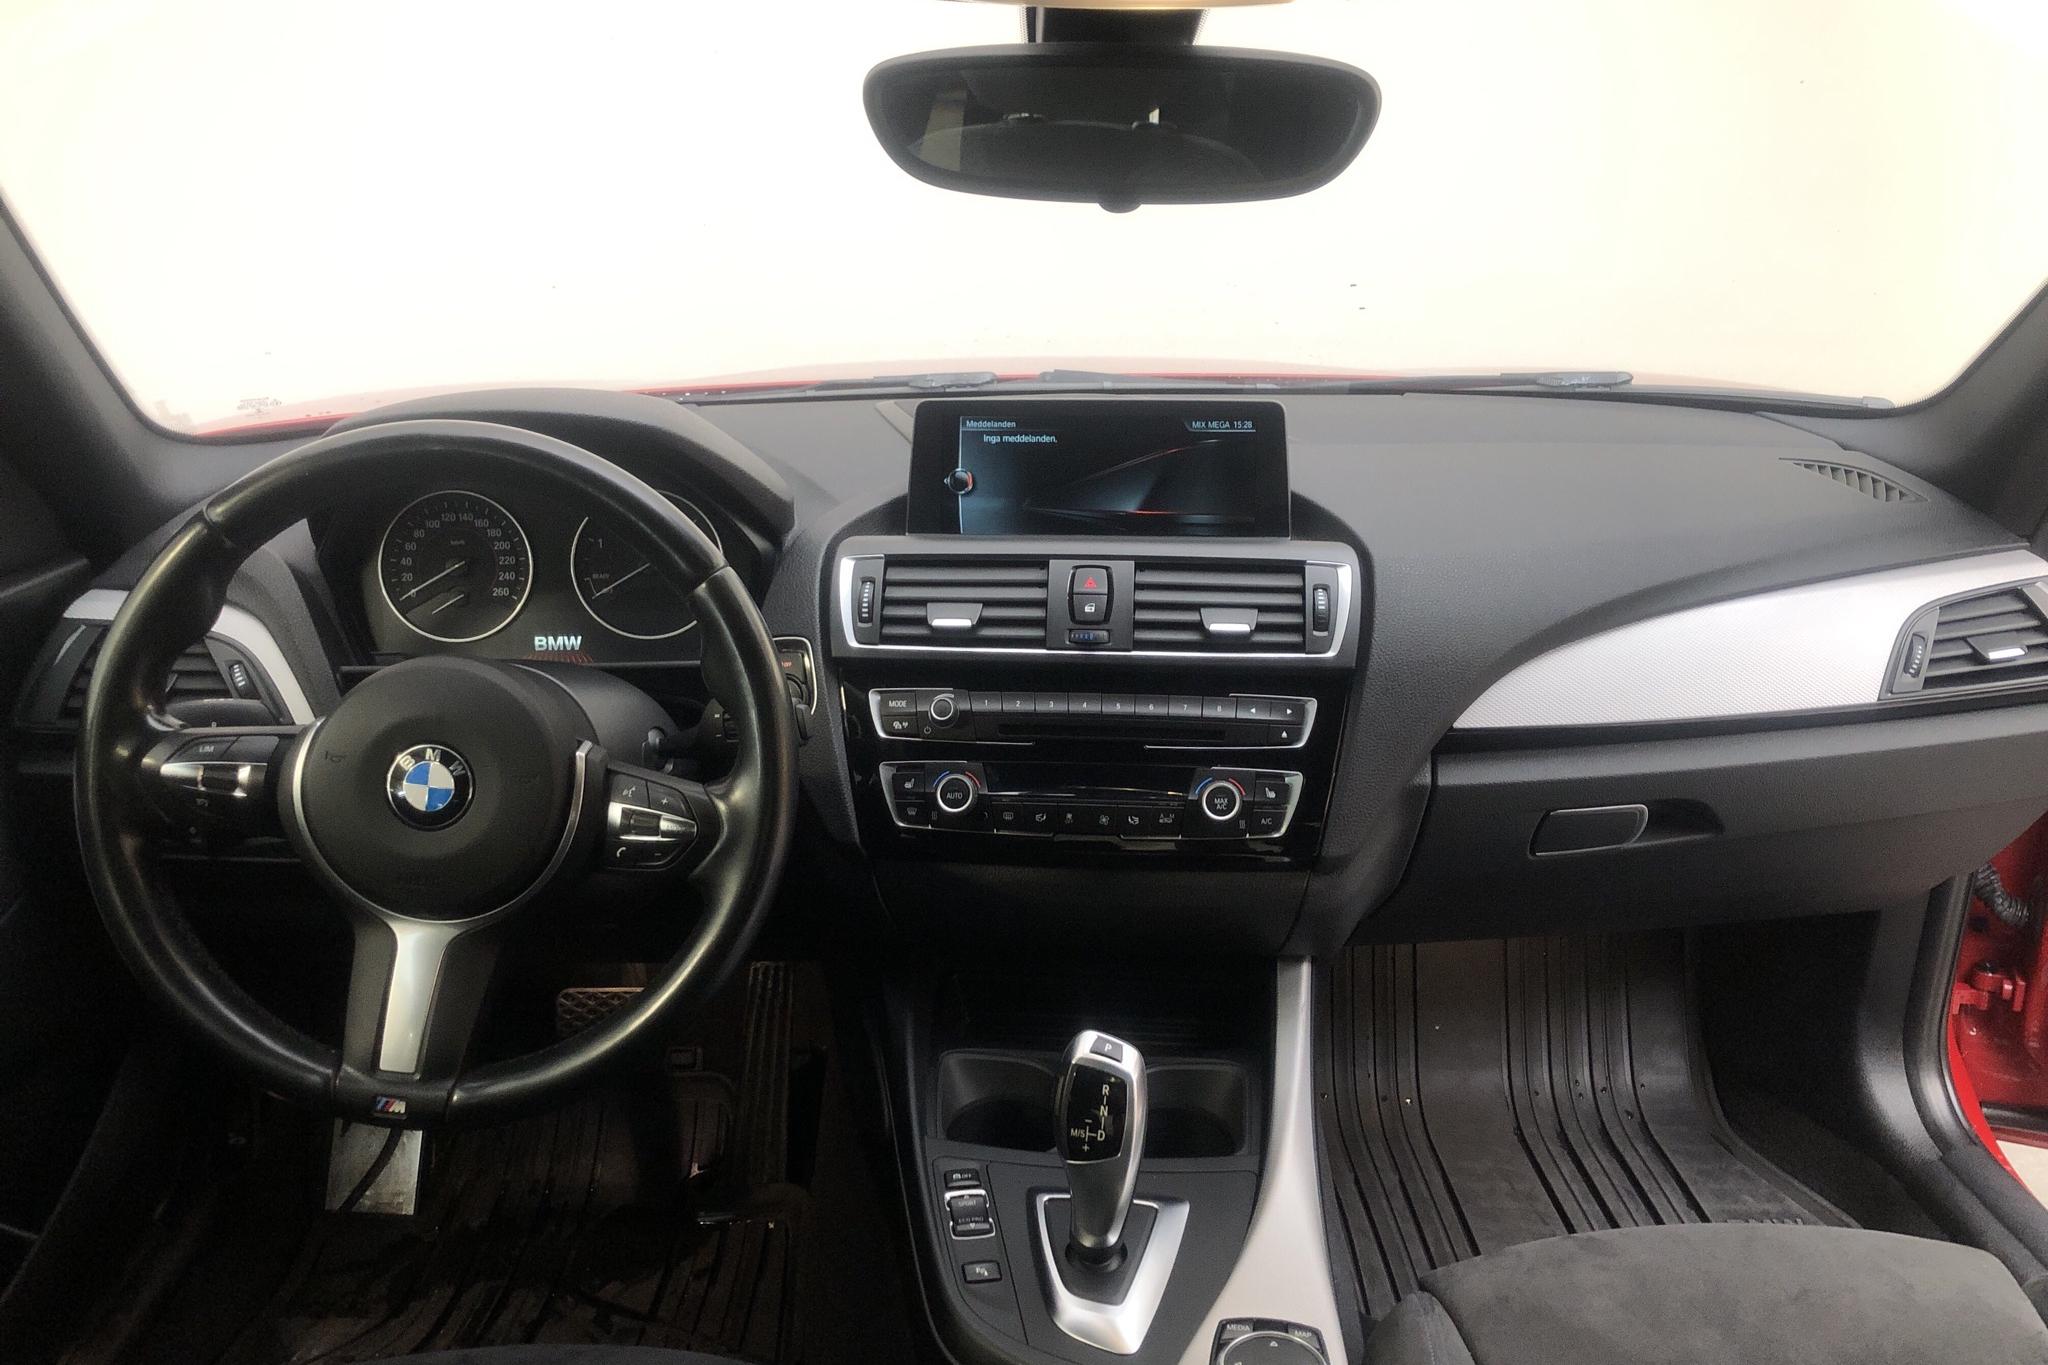 BMW 220d Coupé, F22 (190hk) - 123 770 km - Automatic - red - 2017